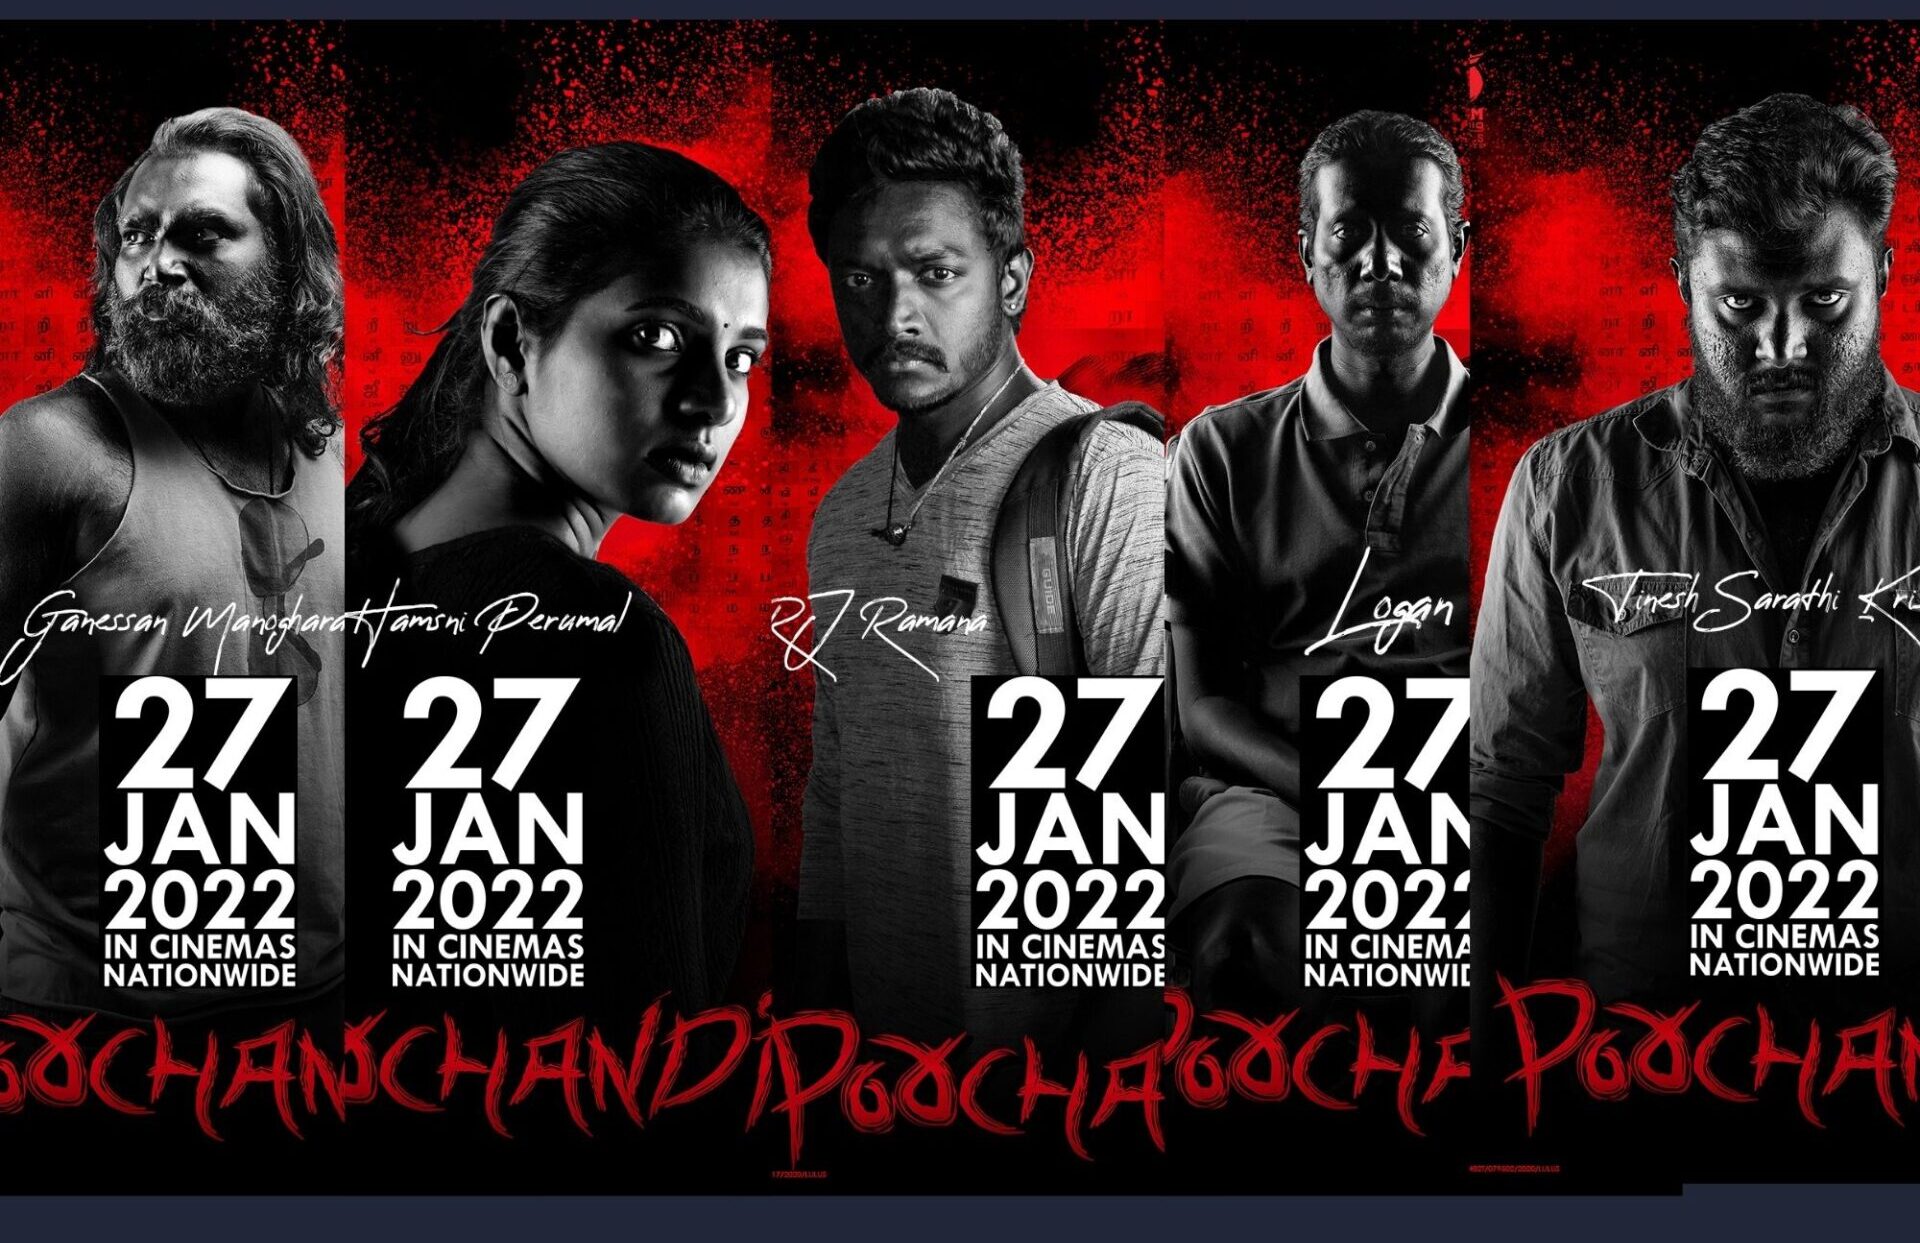 Malaysia cast poochandi movie Poochandi; Brilliant